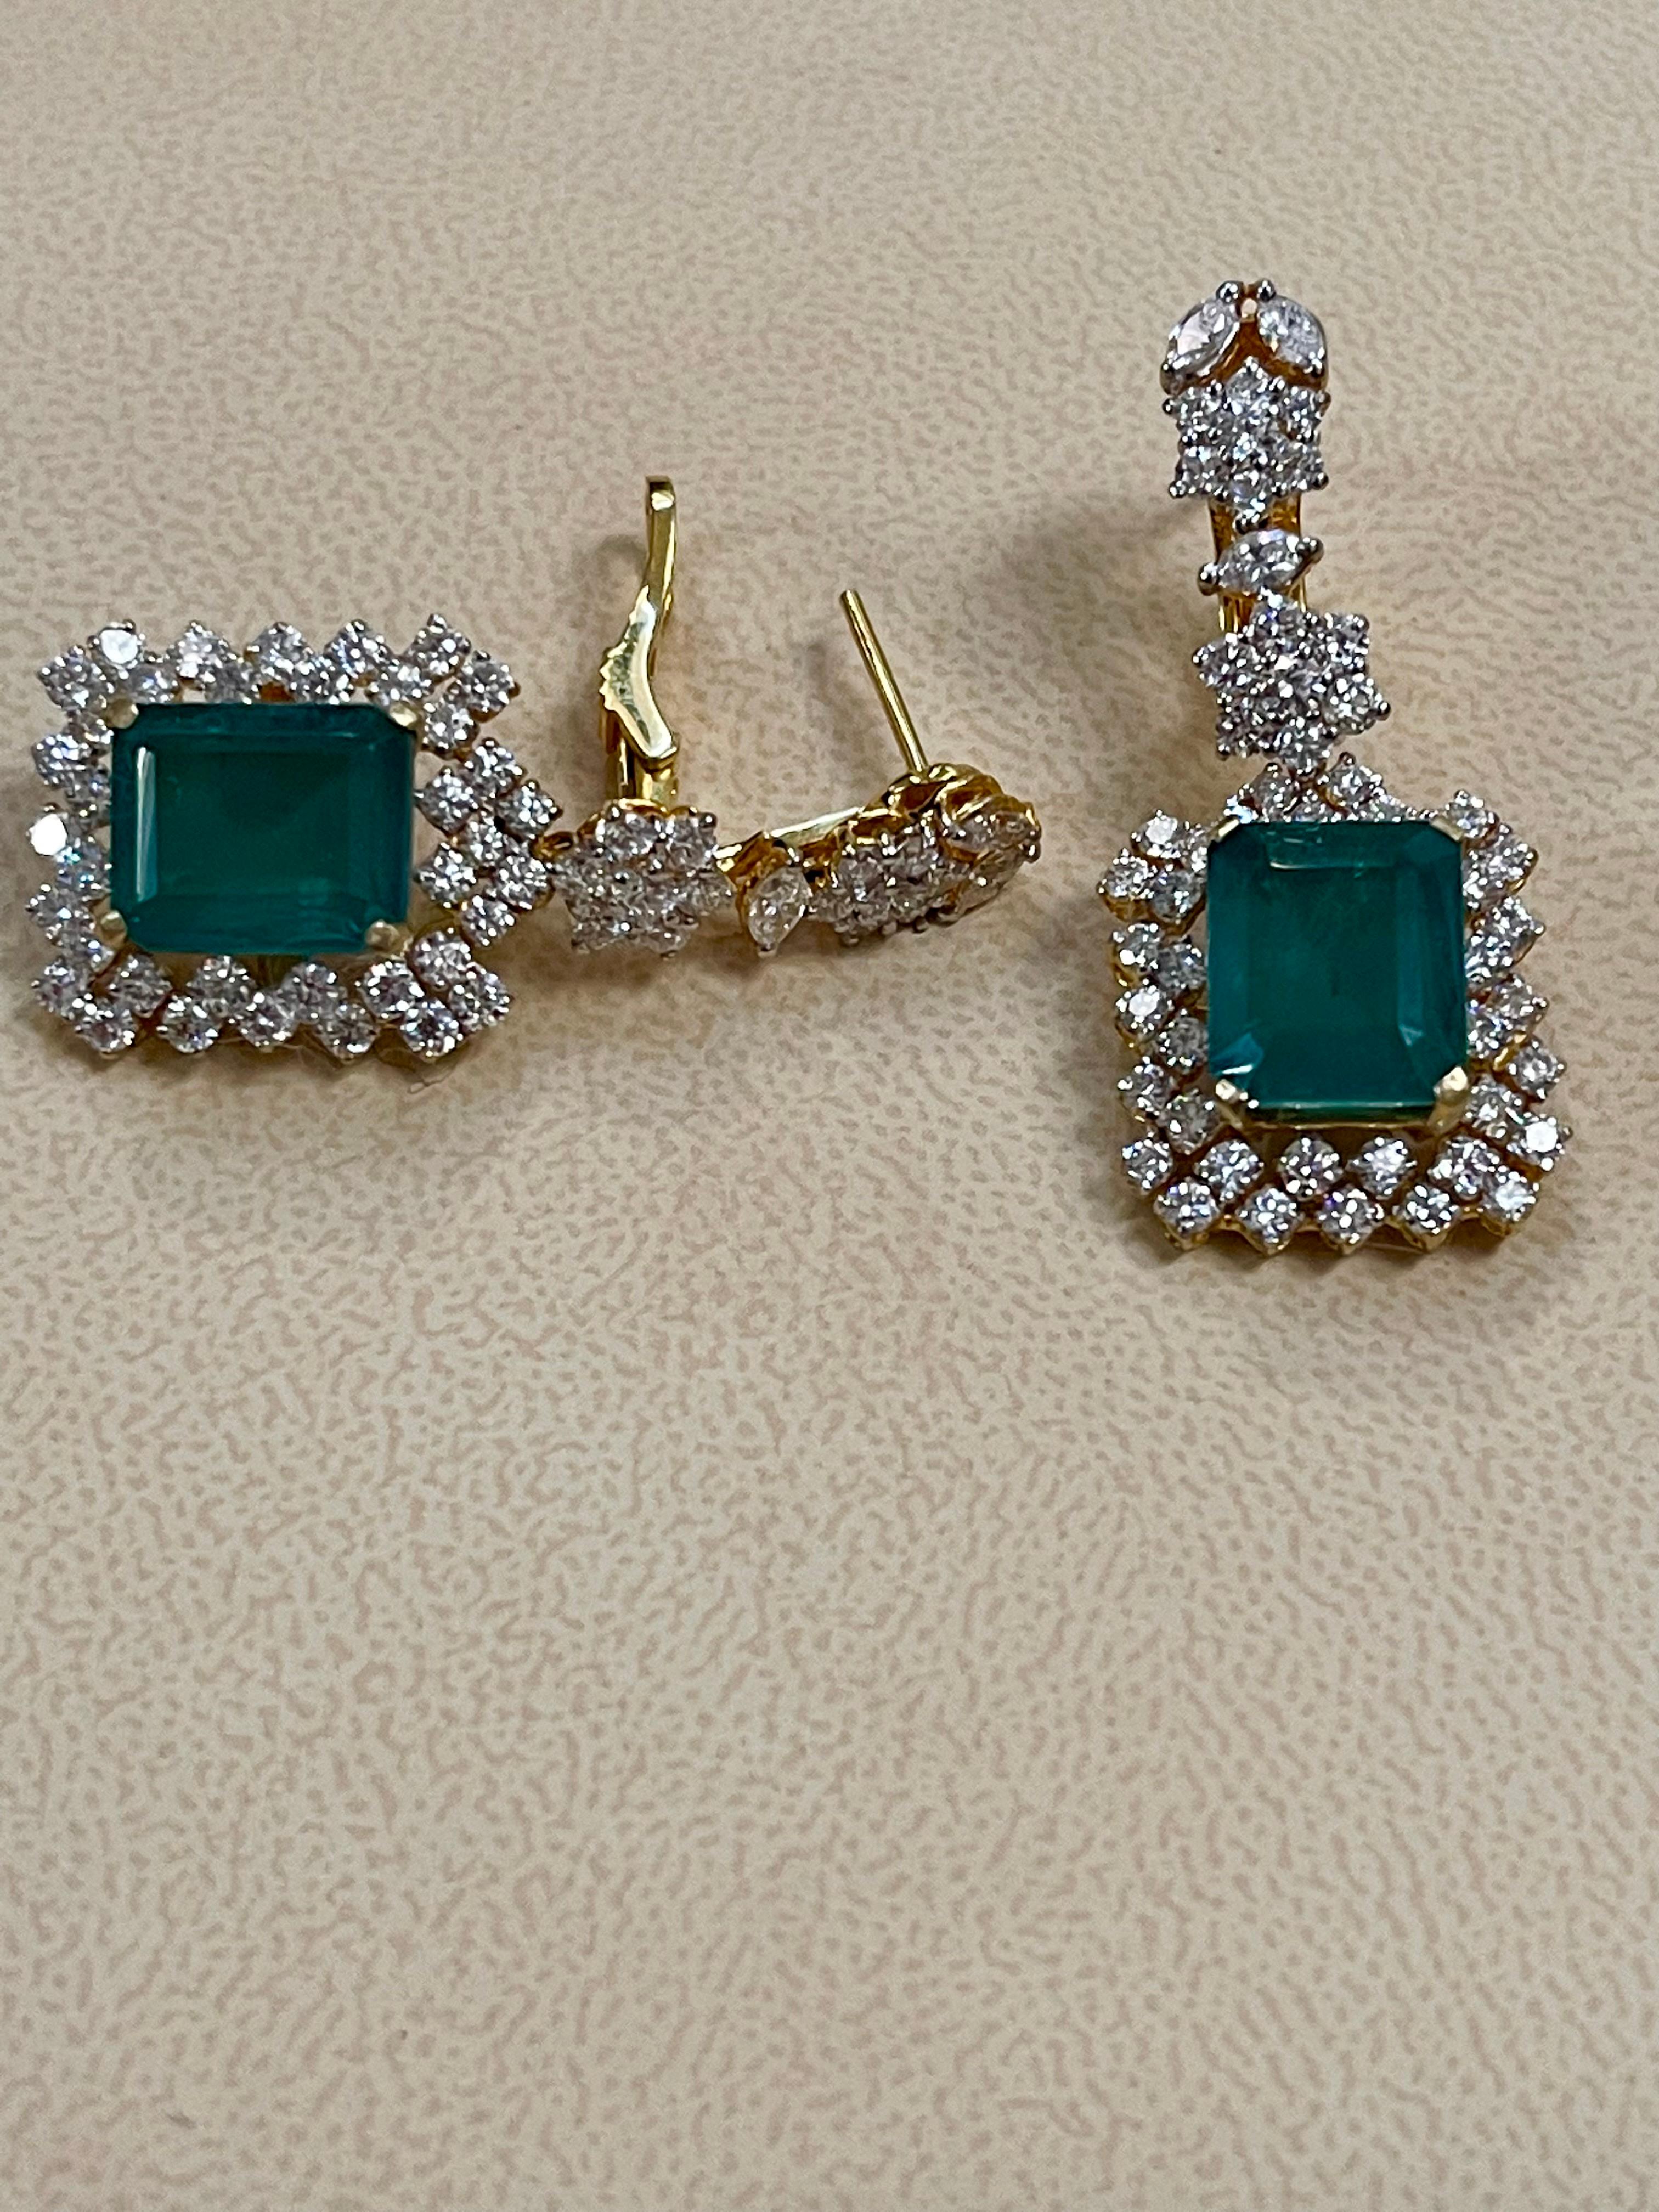 Hydro Emerald Cut Emerald, 7Ct VS Diamond Dangle/Drop Earrings 18 Kt Gold For Sale 9